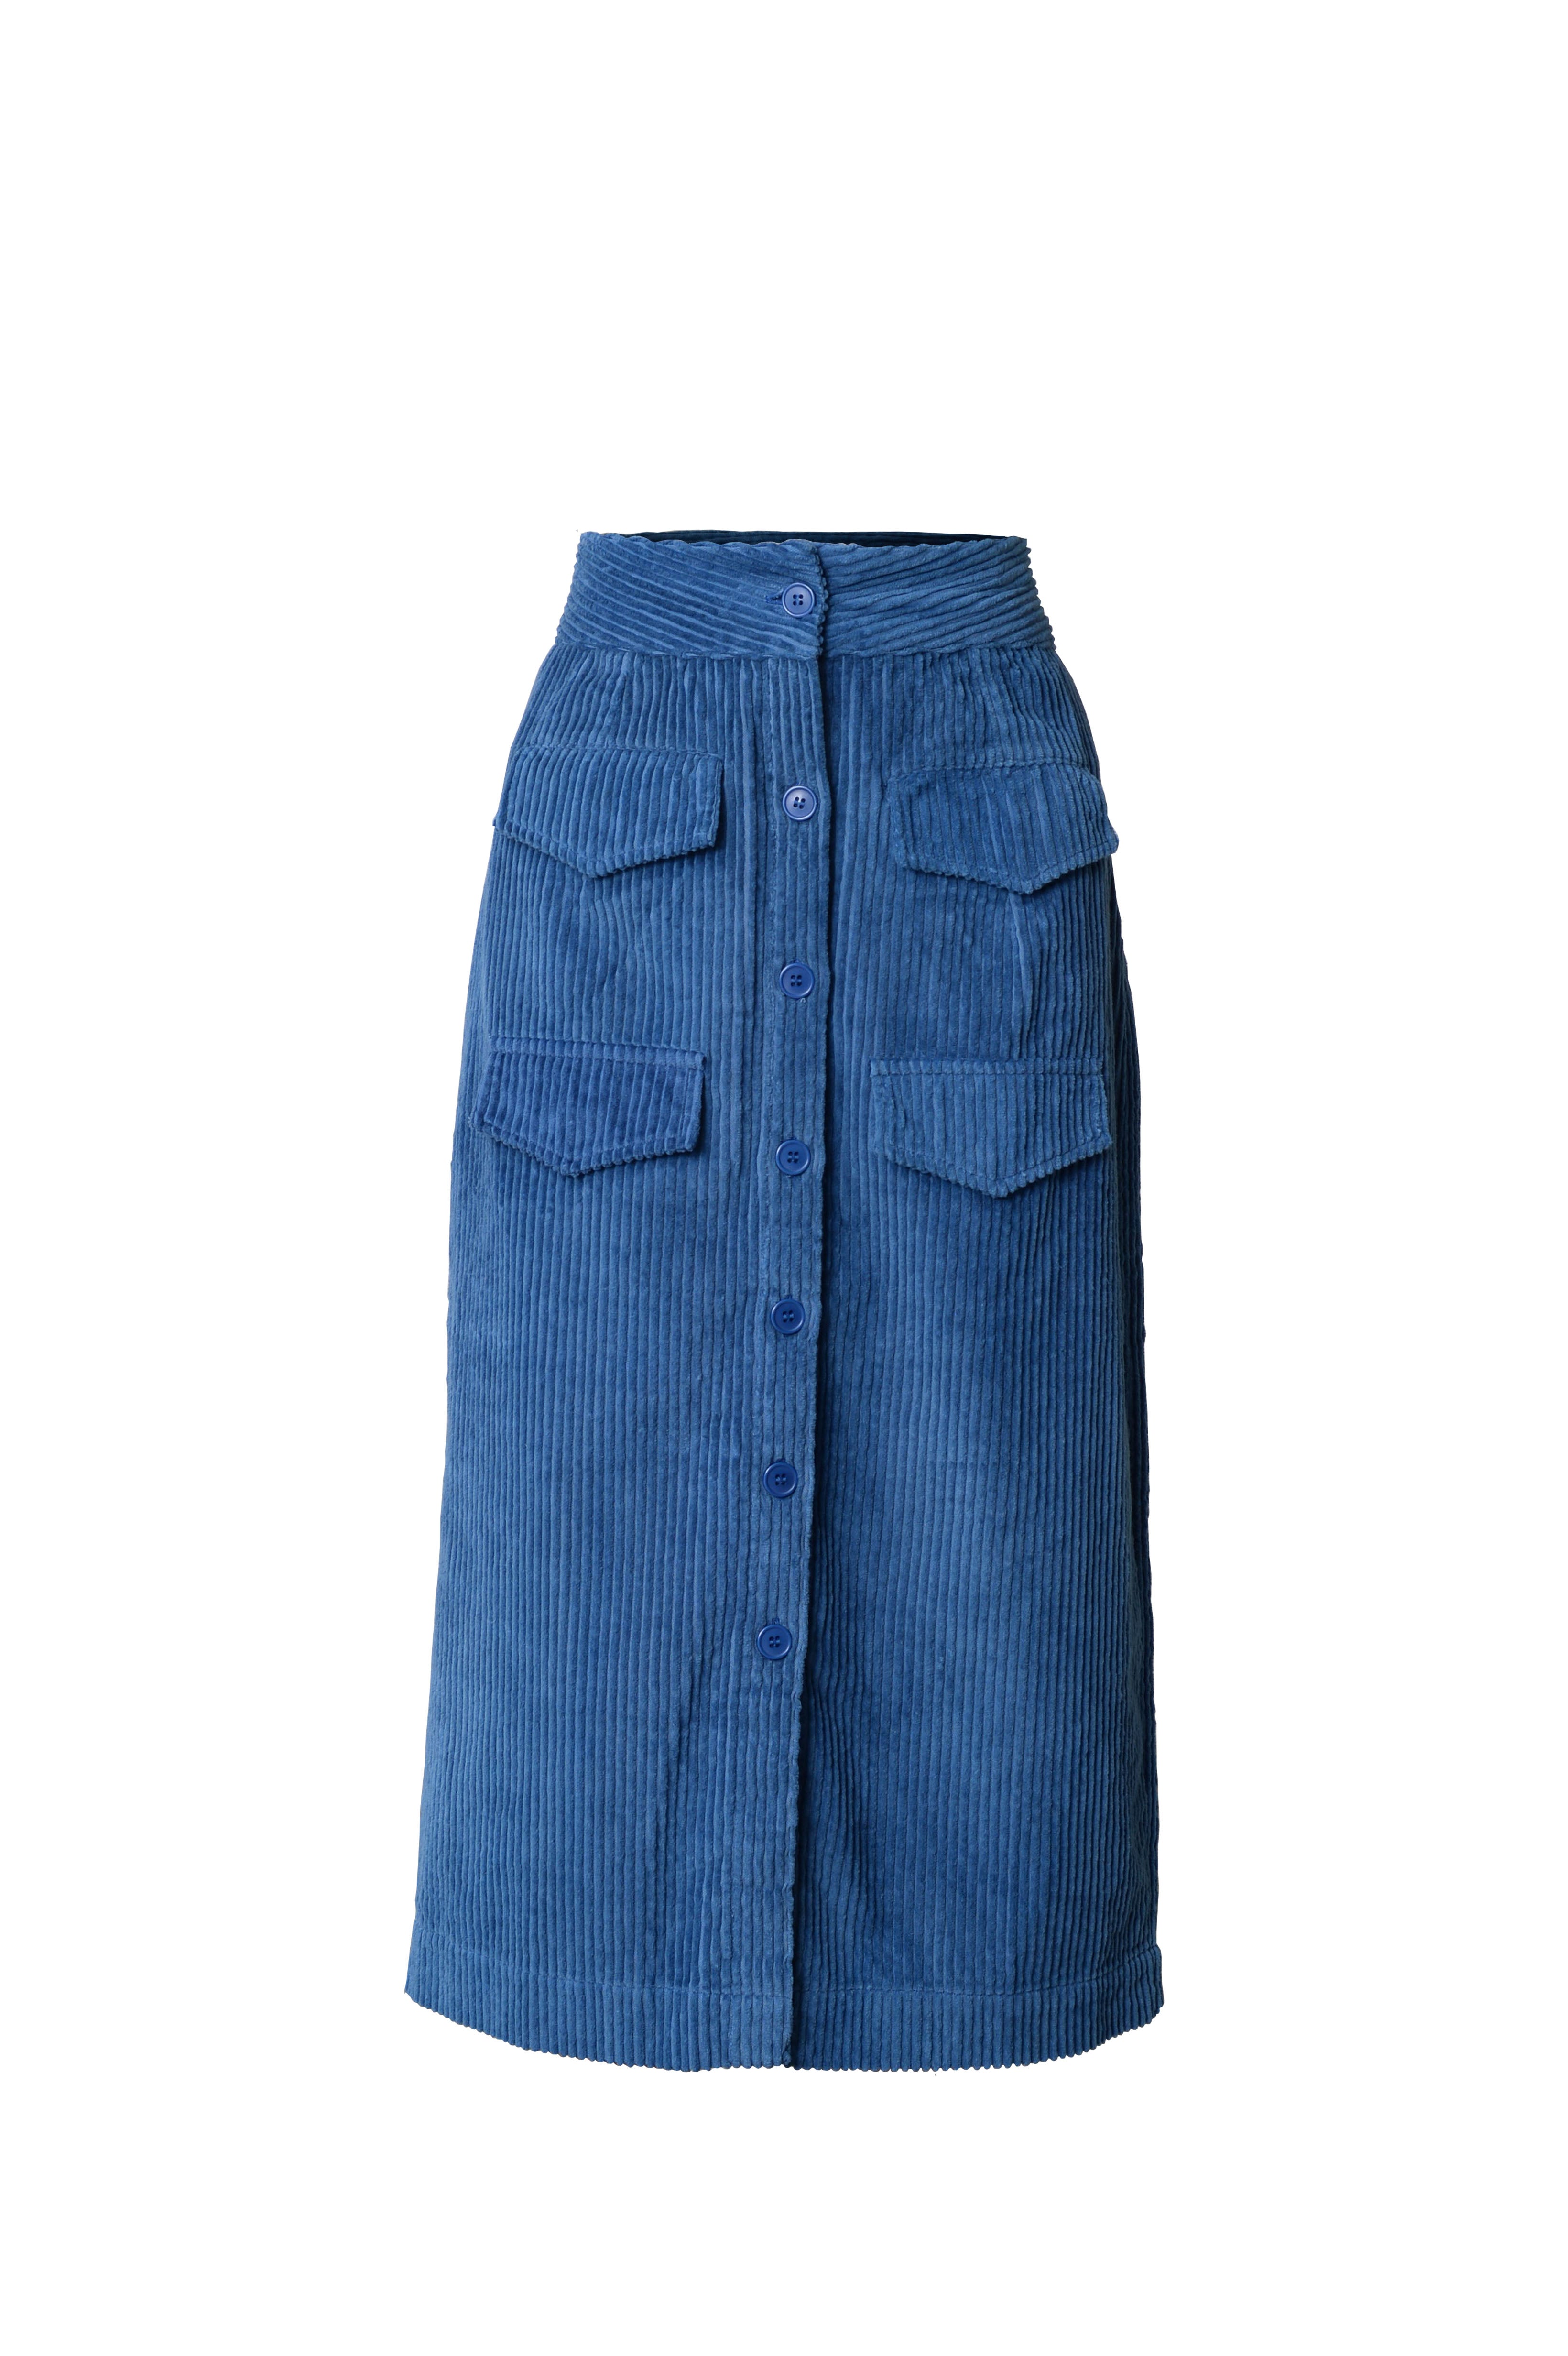 Barbara blue corduroy long skirt